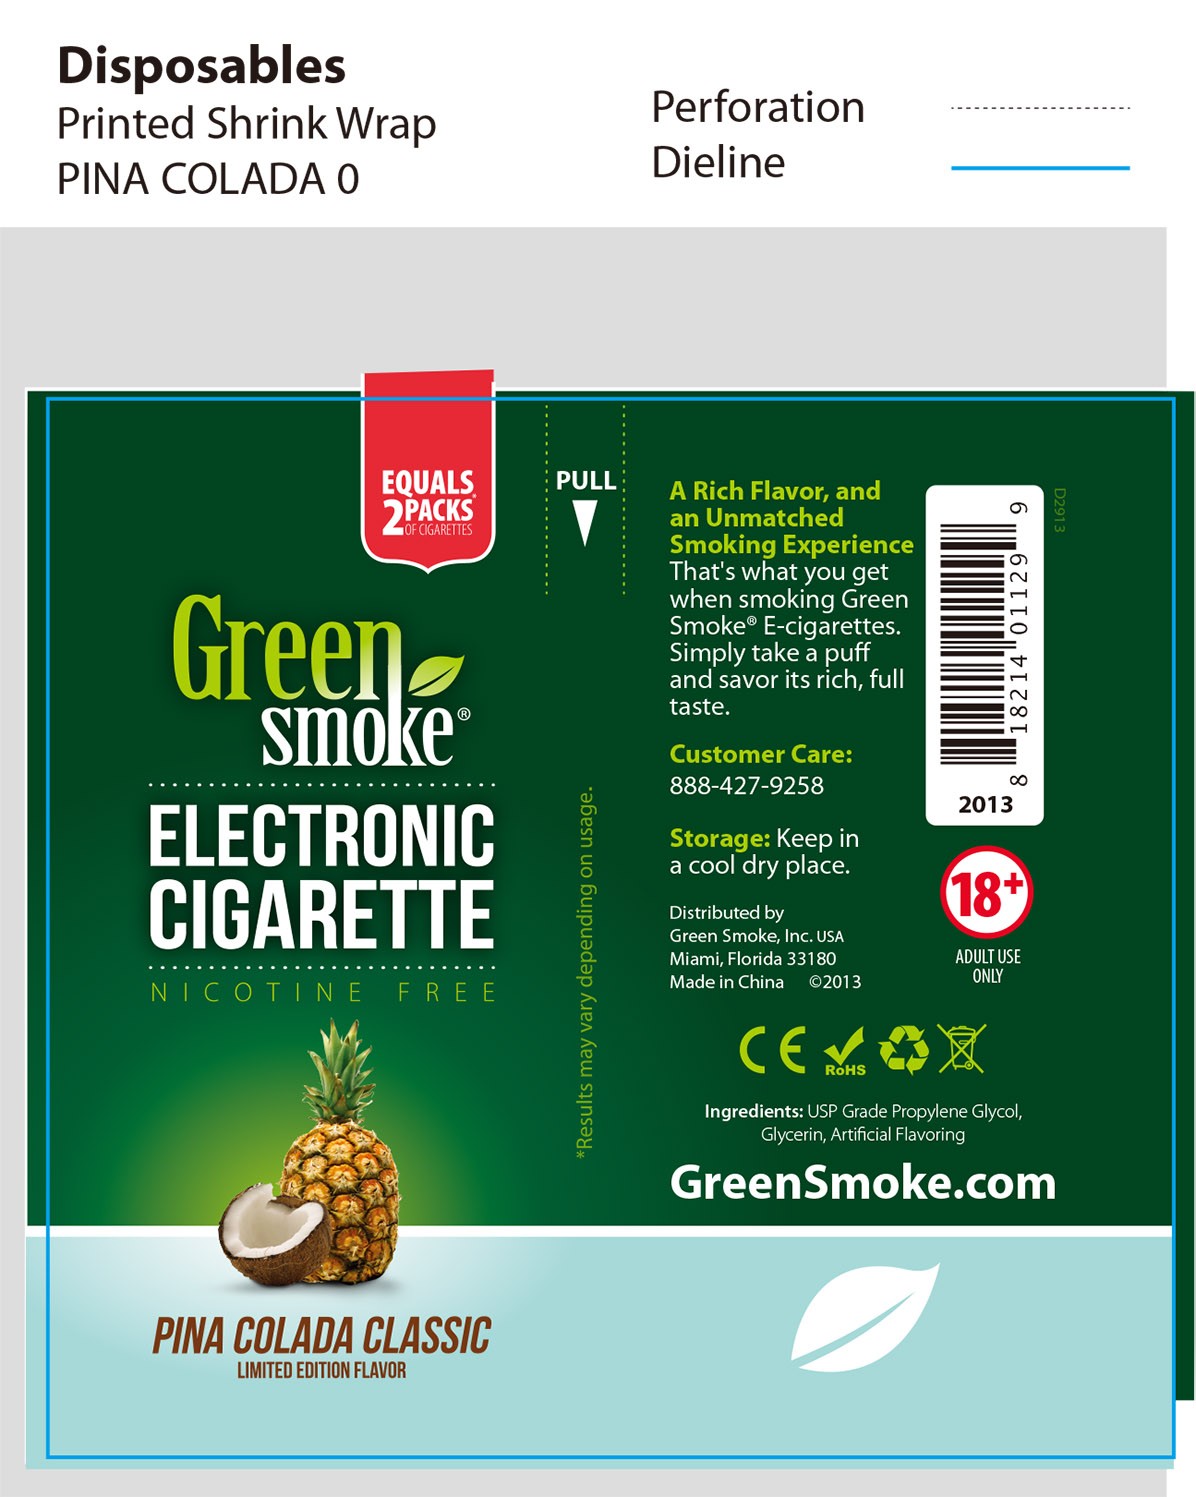 Greensmoke电子烟包装设计